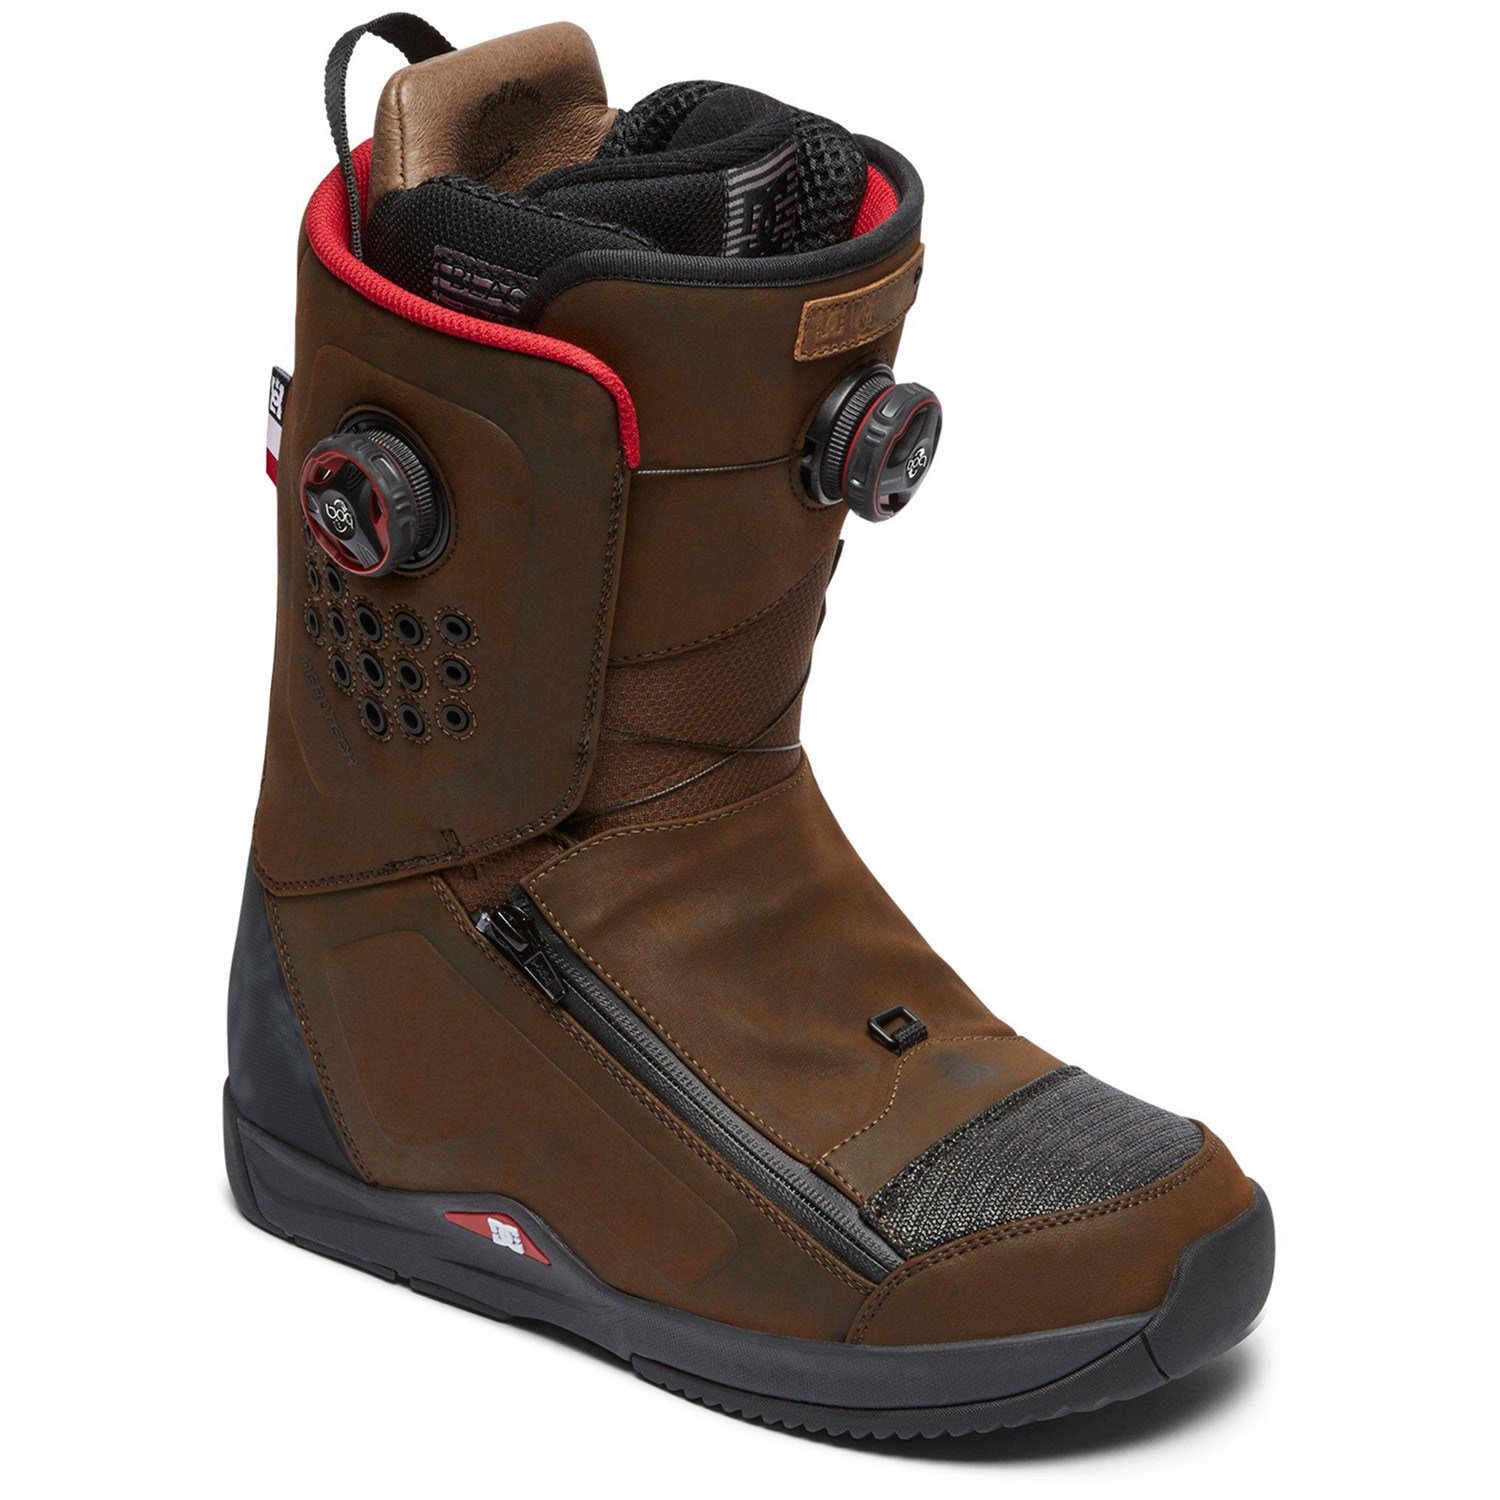 travis rice boa snowboard boots